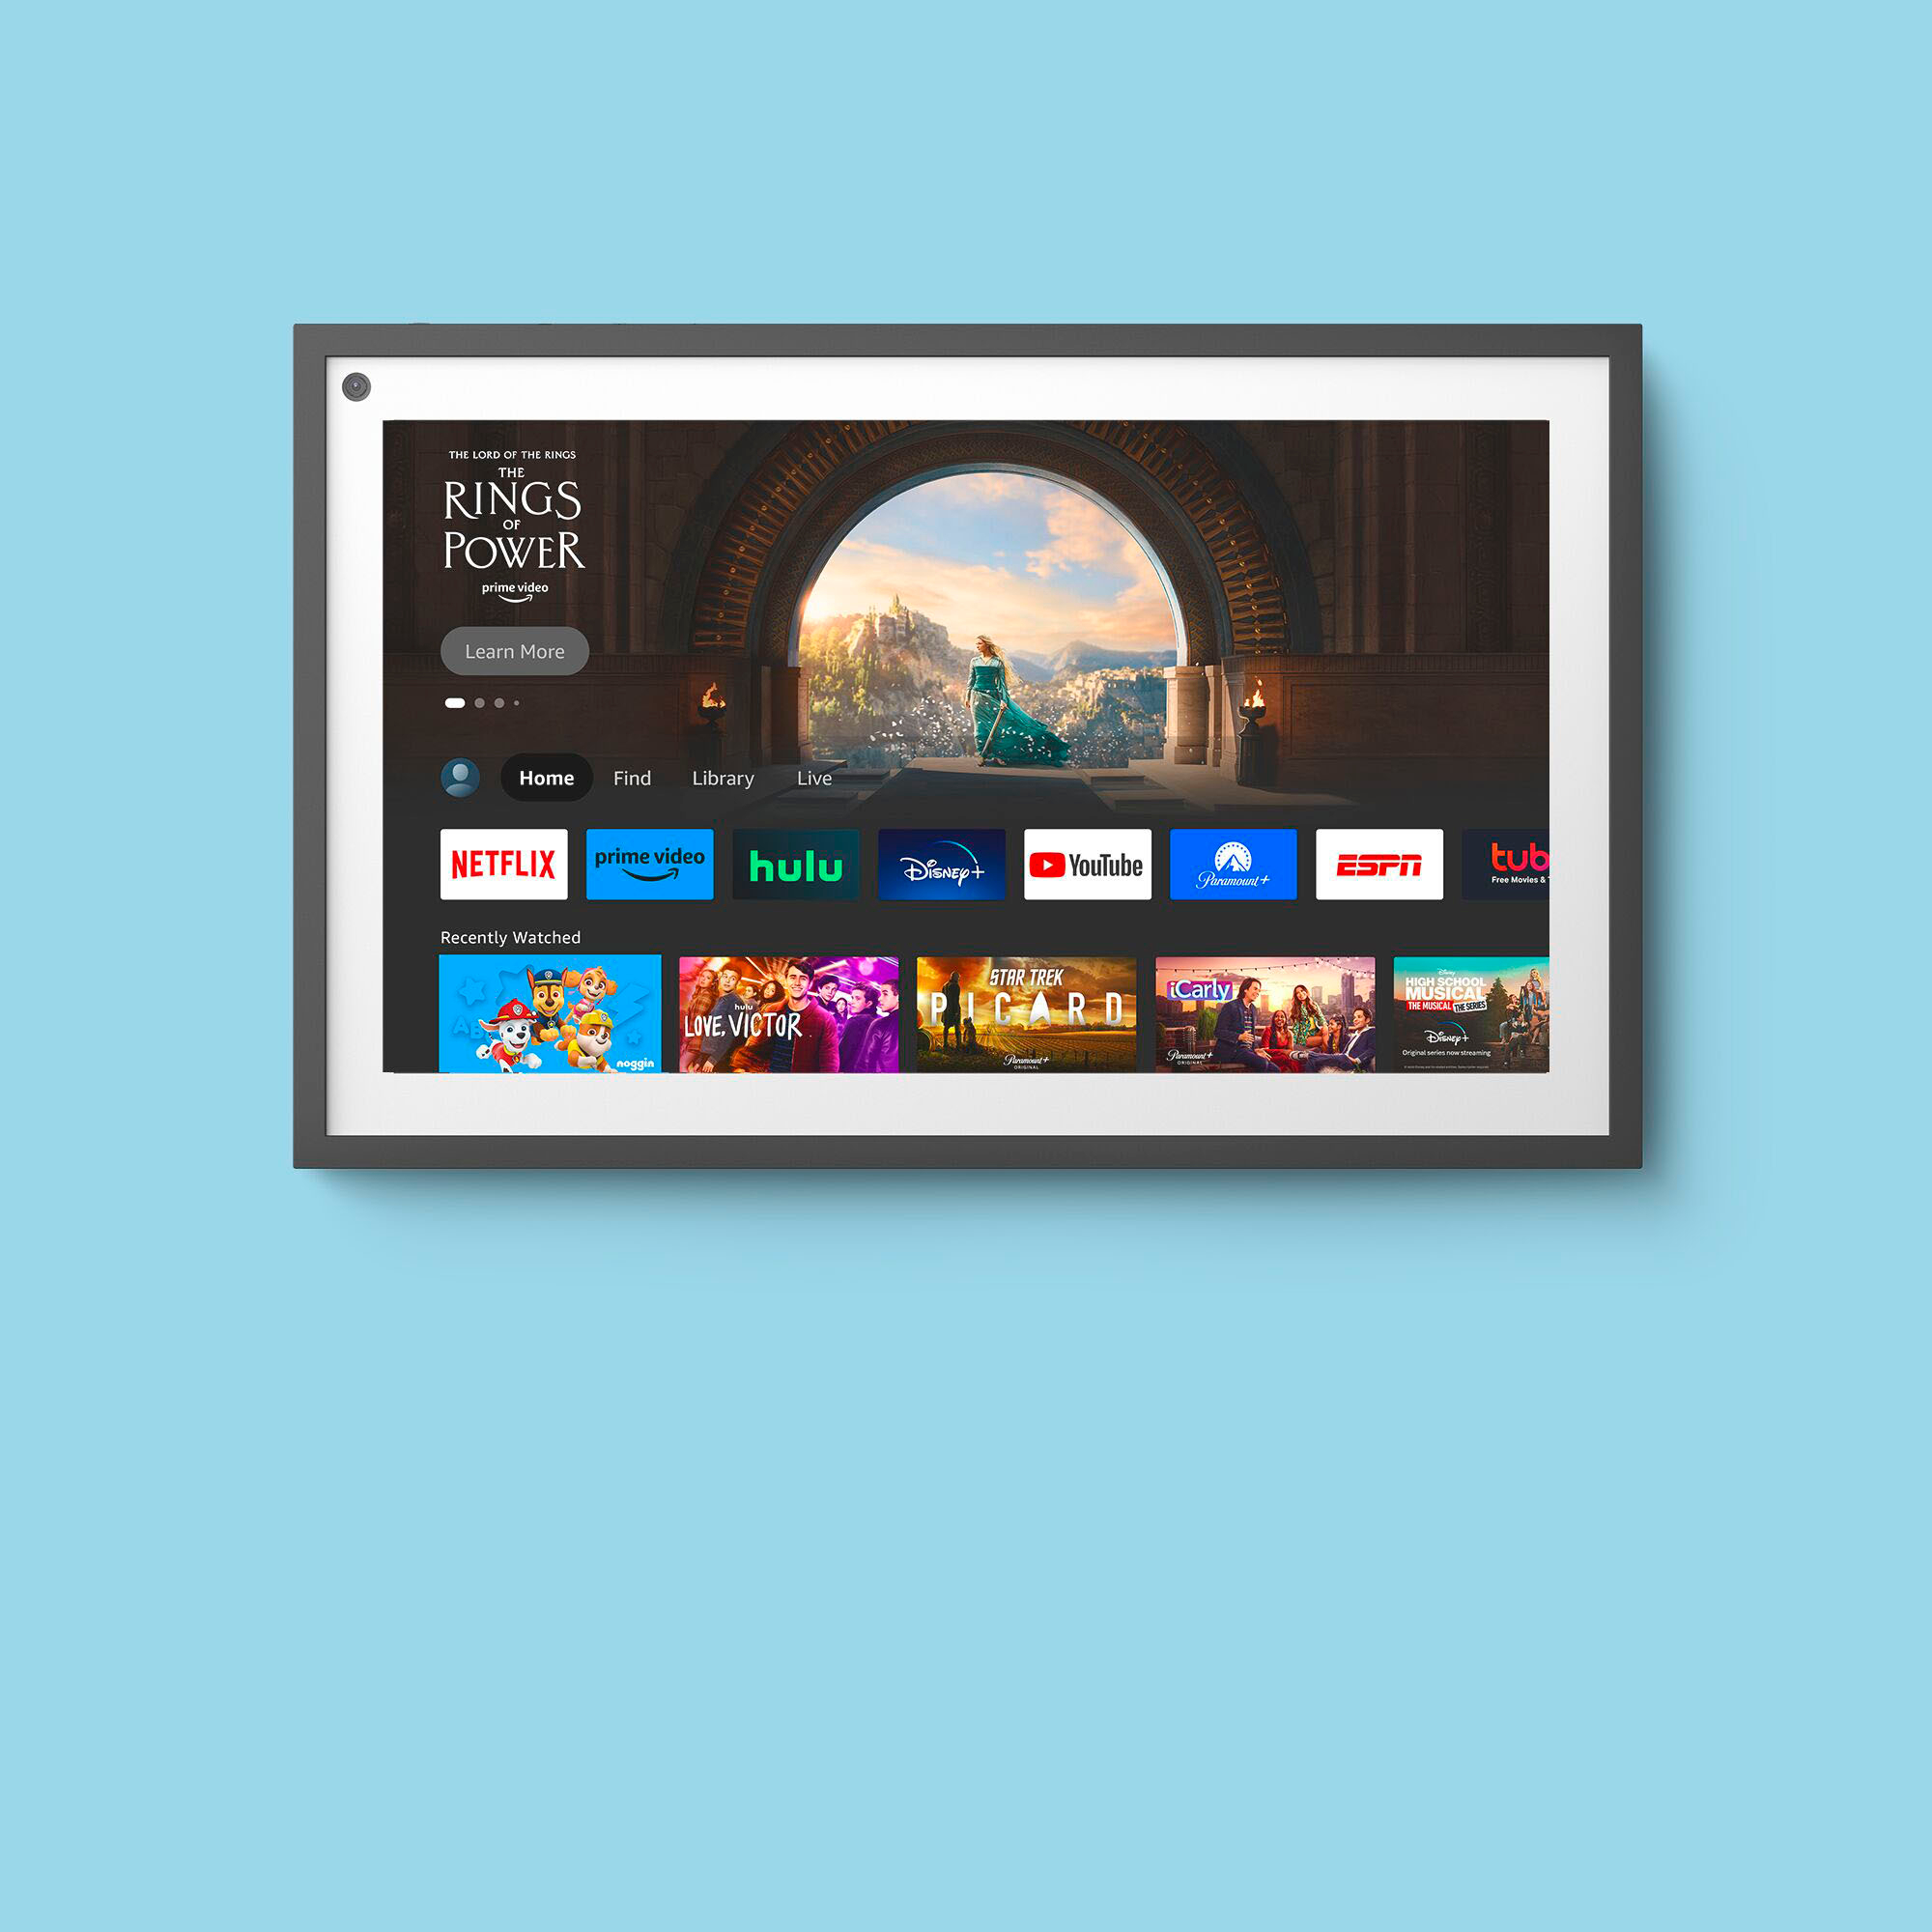 Echo Show 15 15.6-inch full HD smart display with Alexa Fire TV